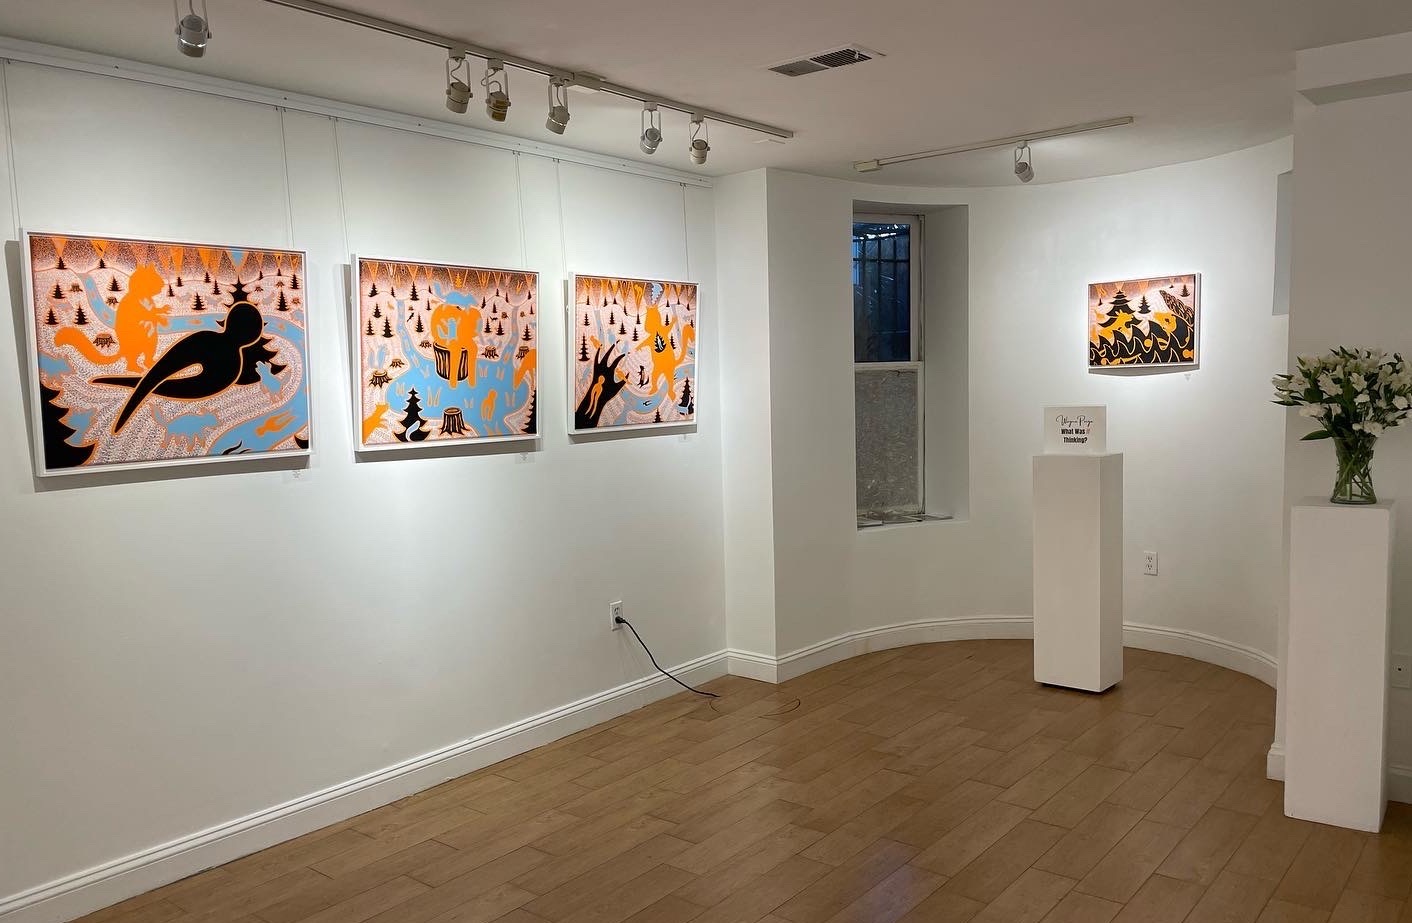 Studio Gallery, September 2022